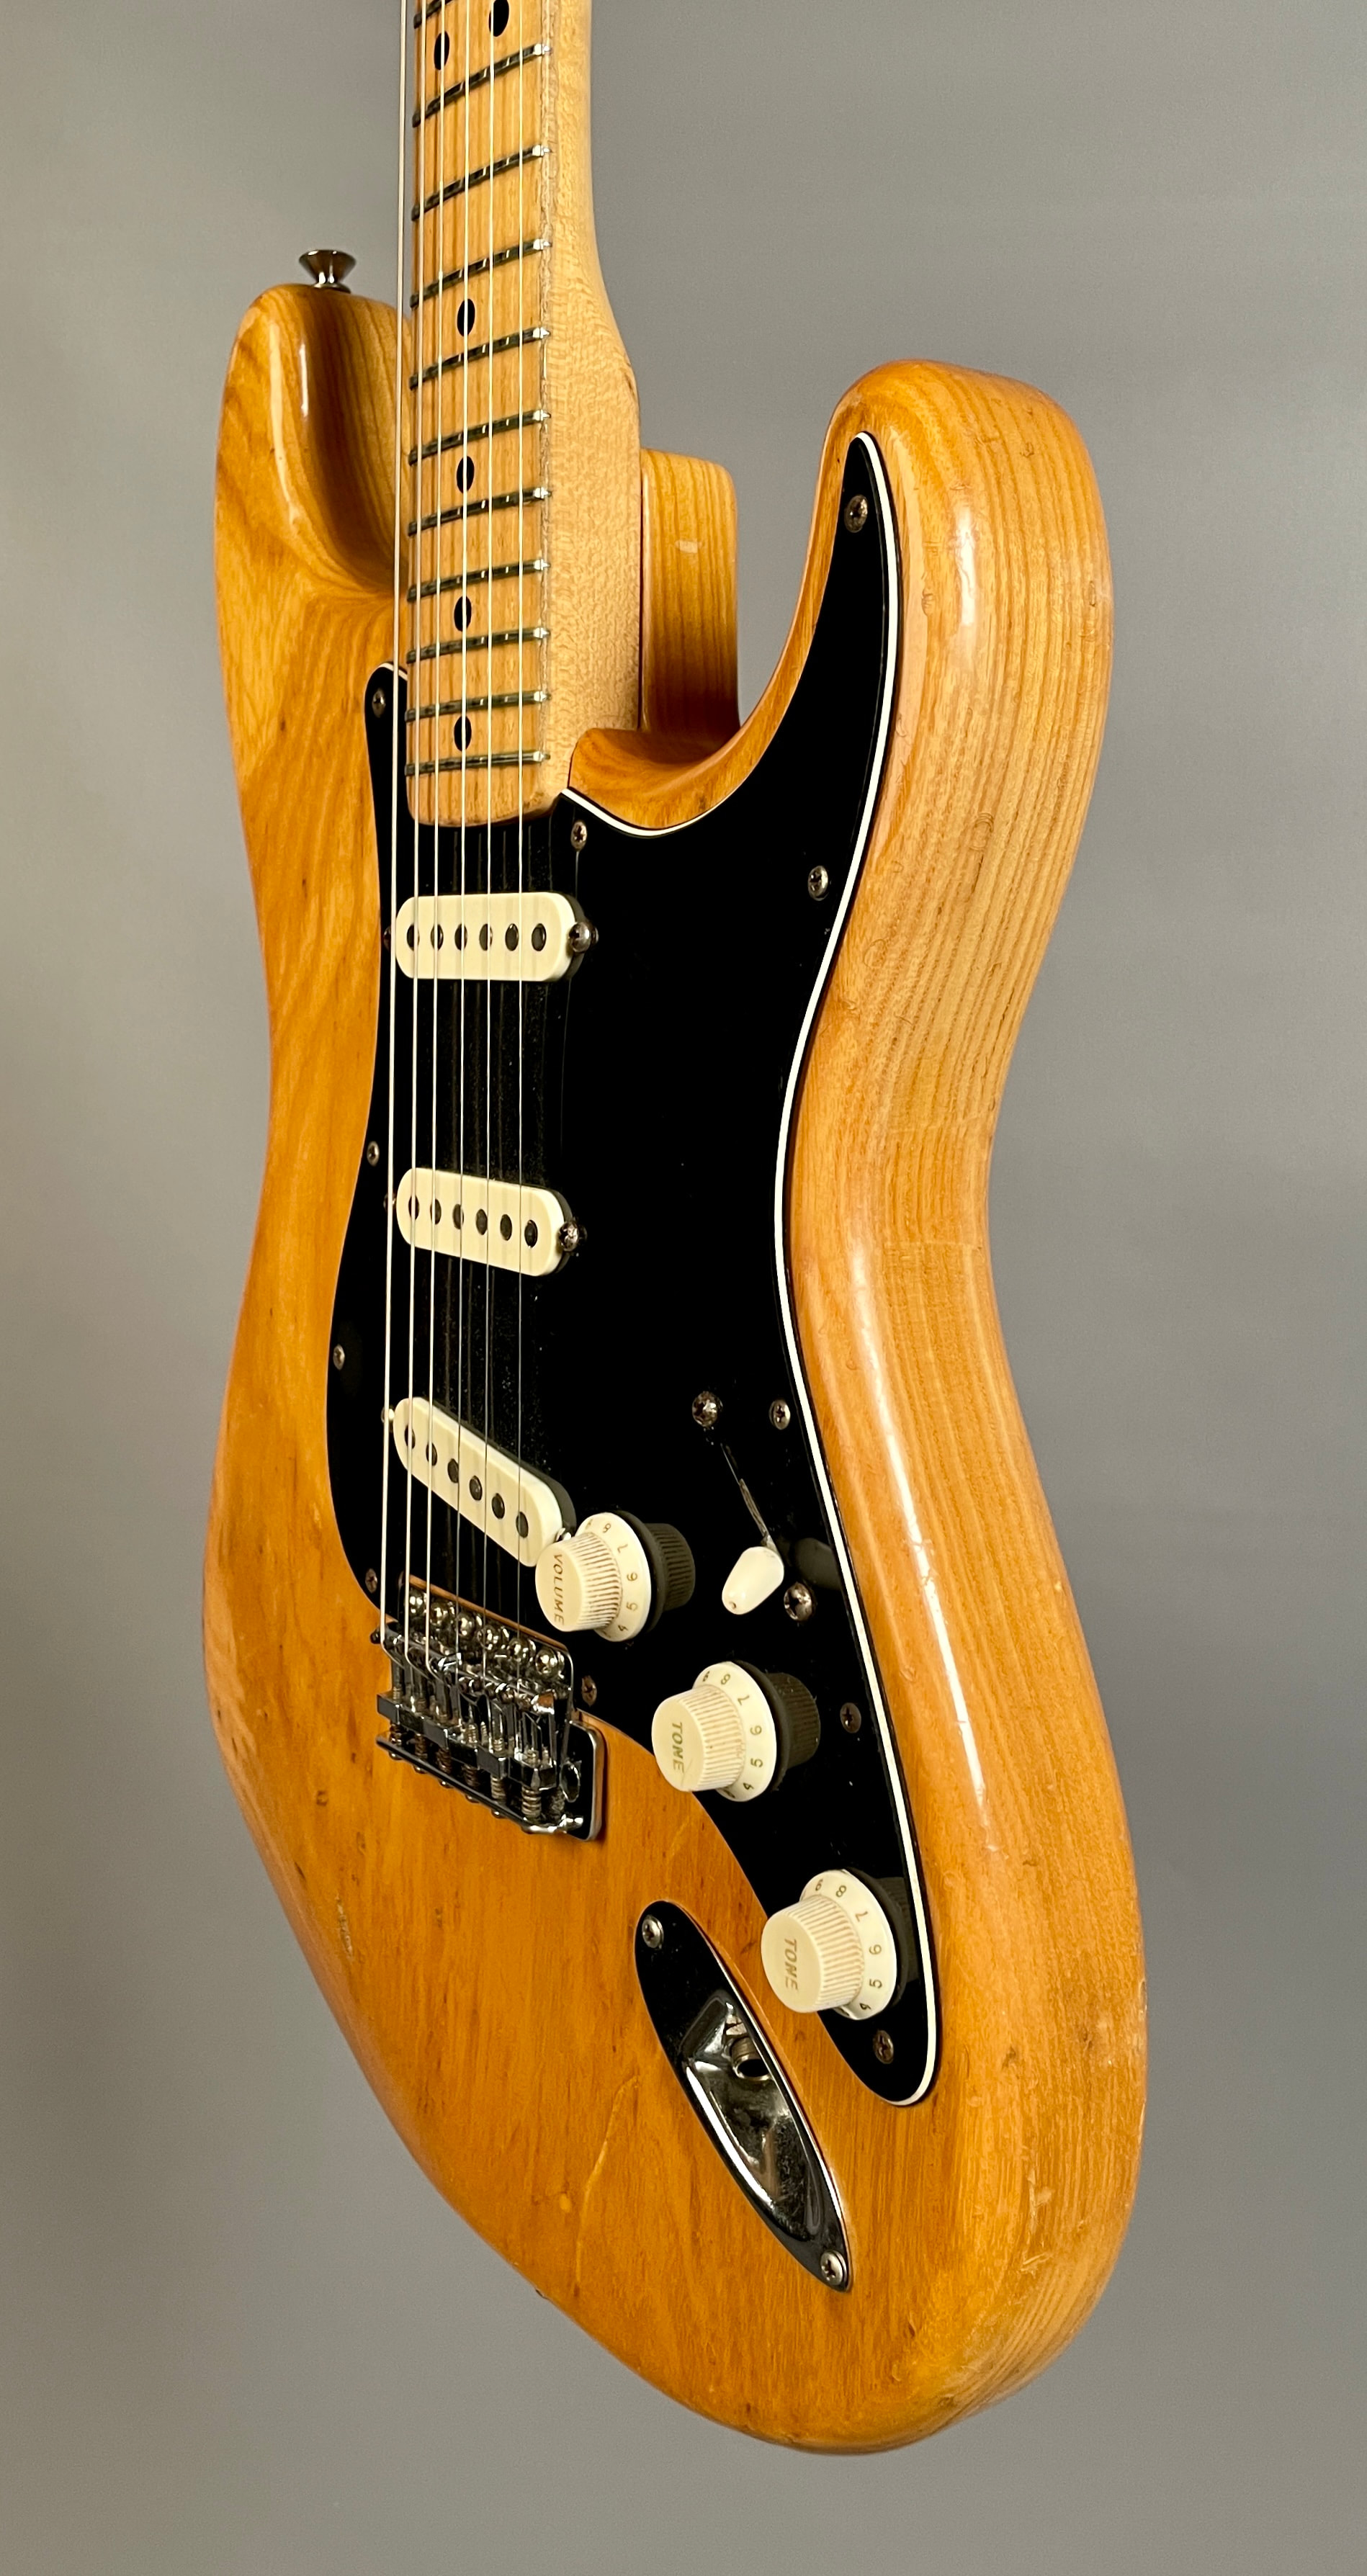 Saco discreción Gracias por tu ayuda Fender Stratocaster 1976 Natural vintage electric guitar